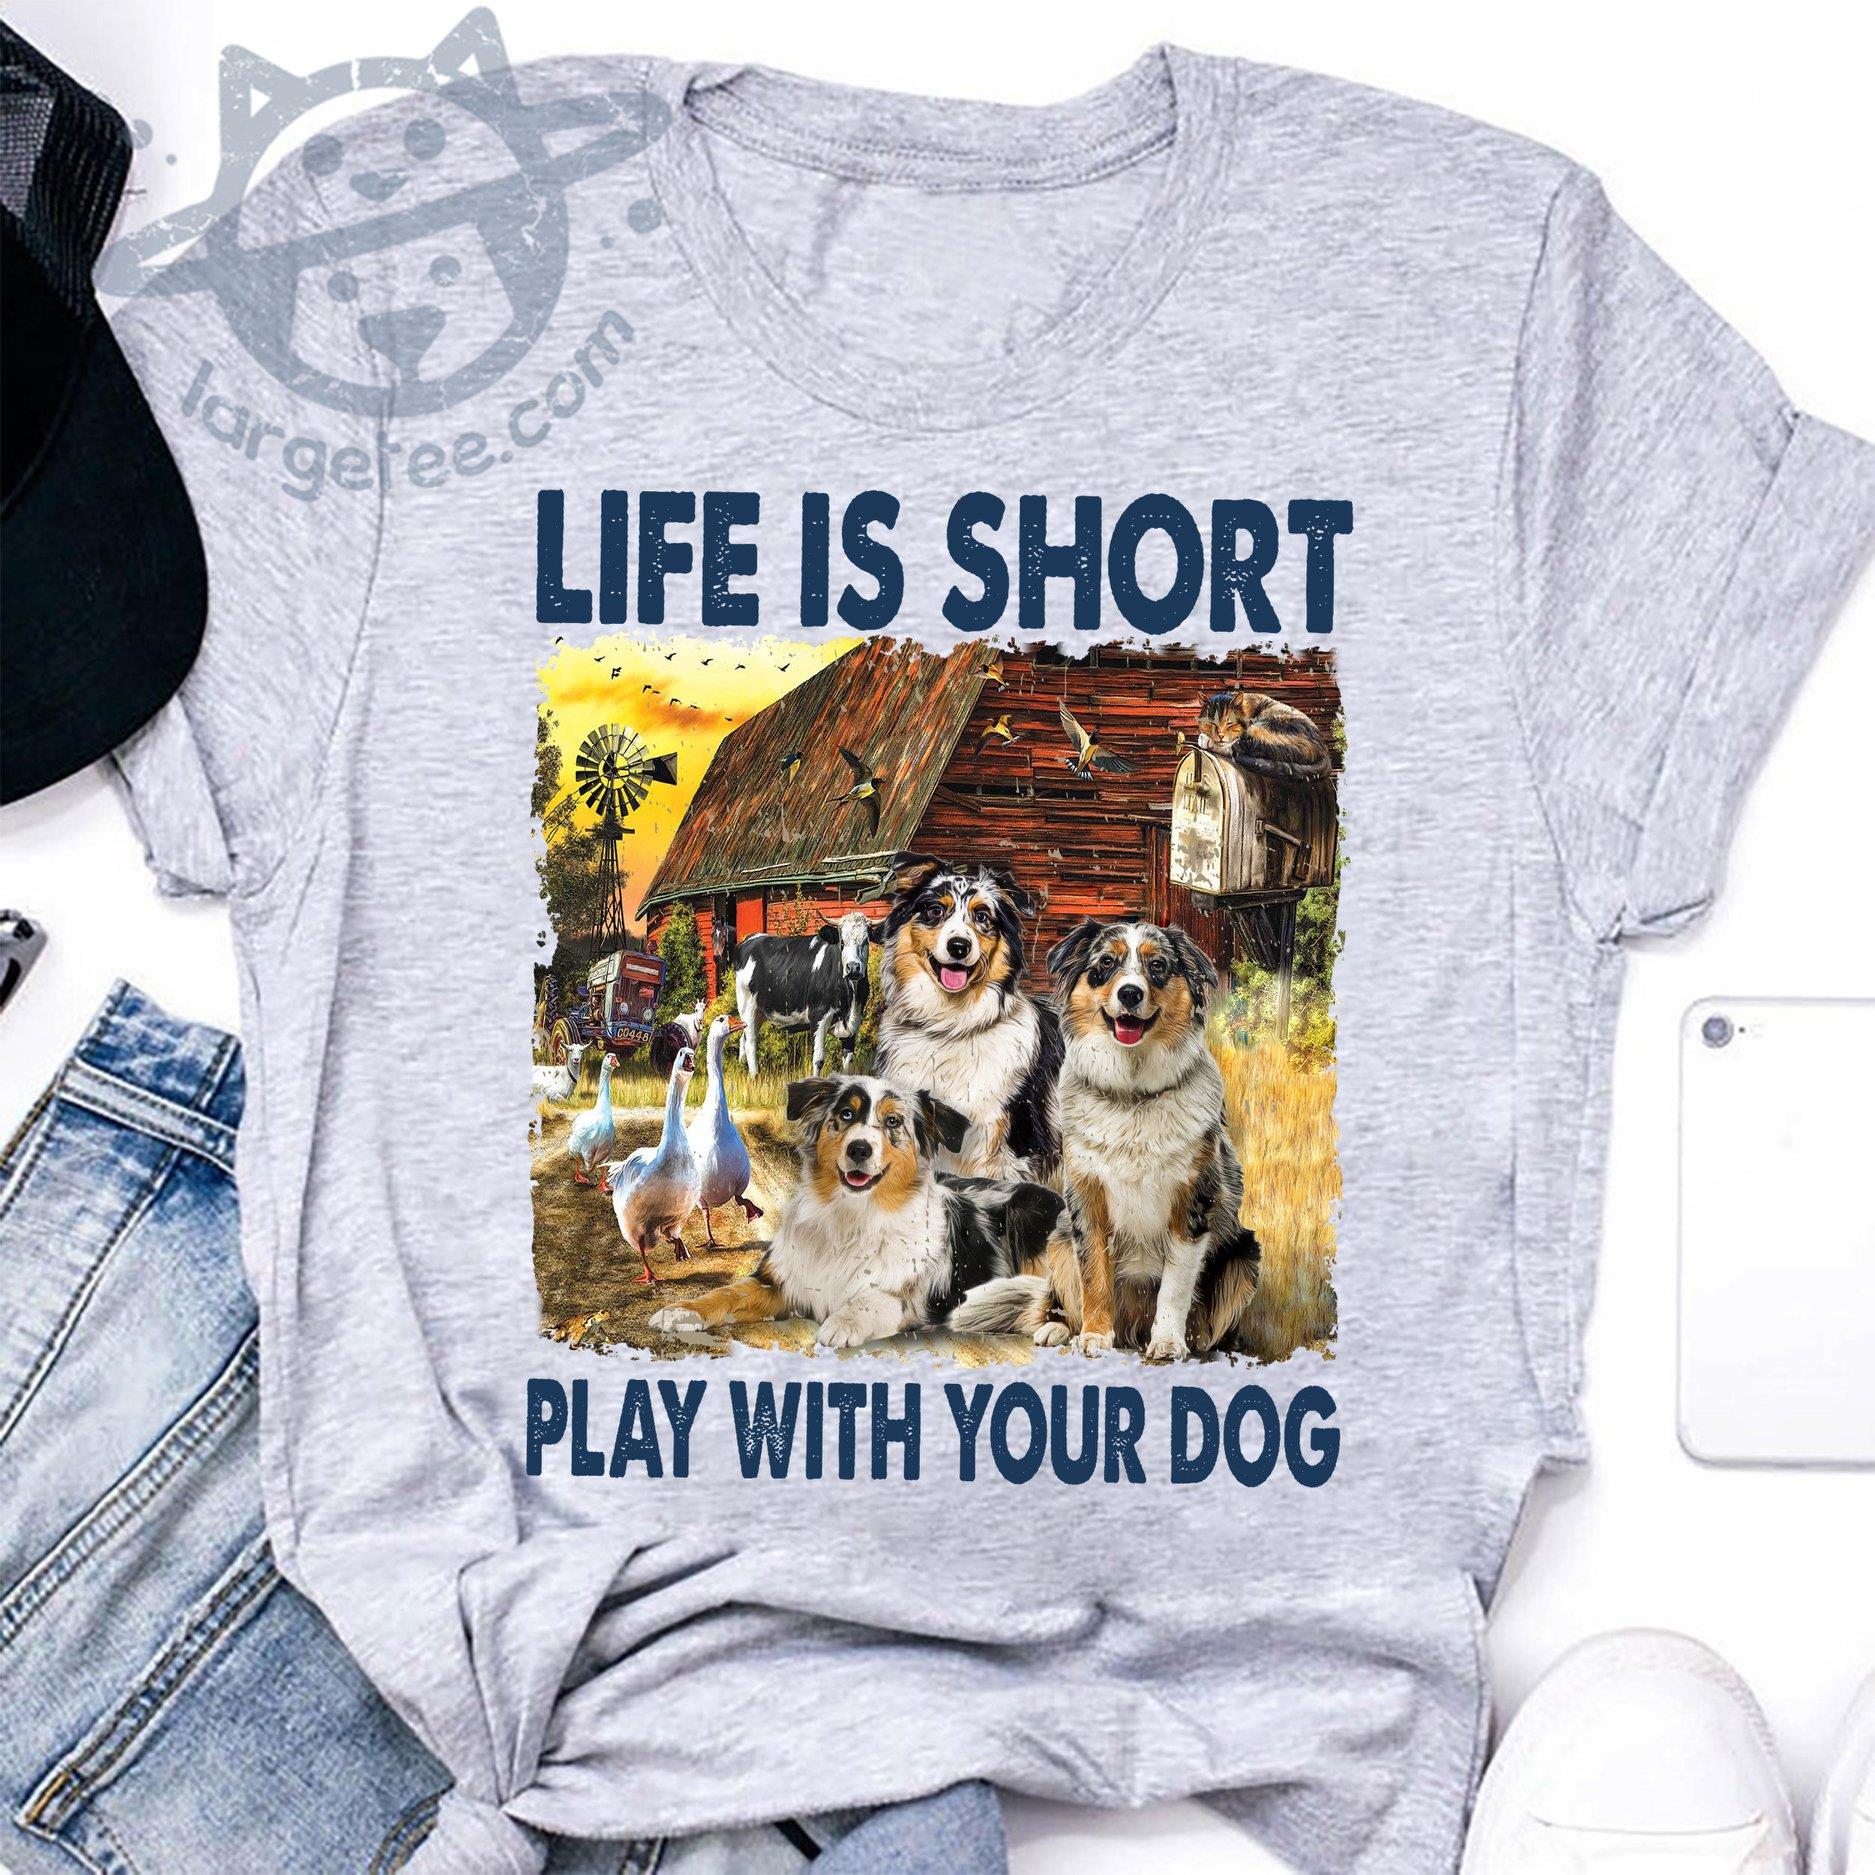 Life is short play with your dog - Australian shepherd dog